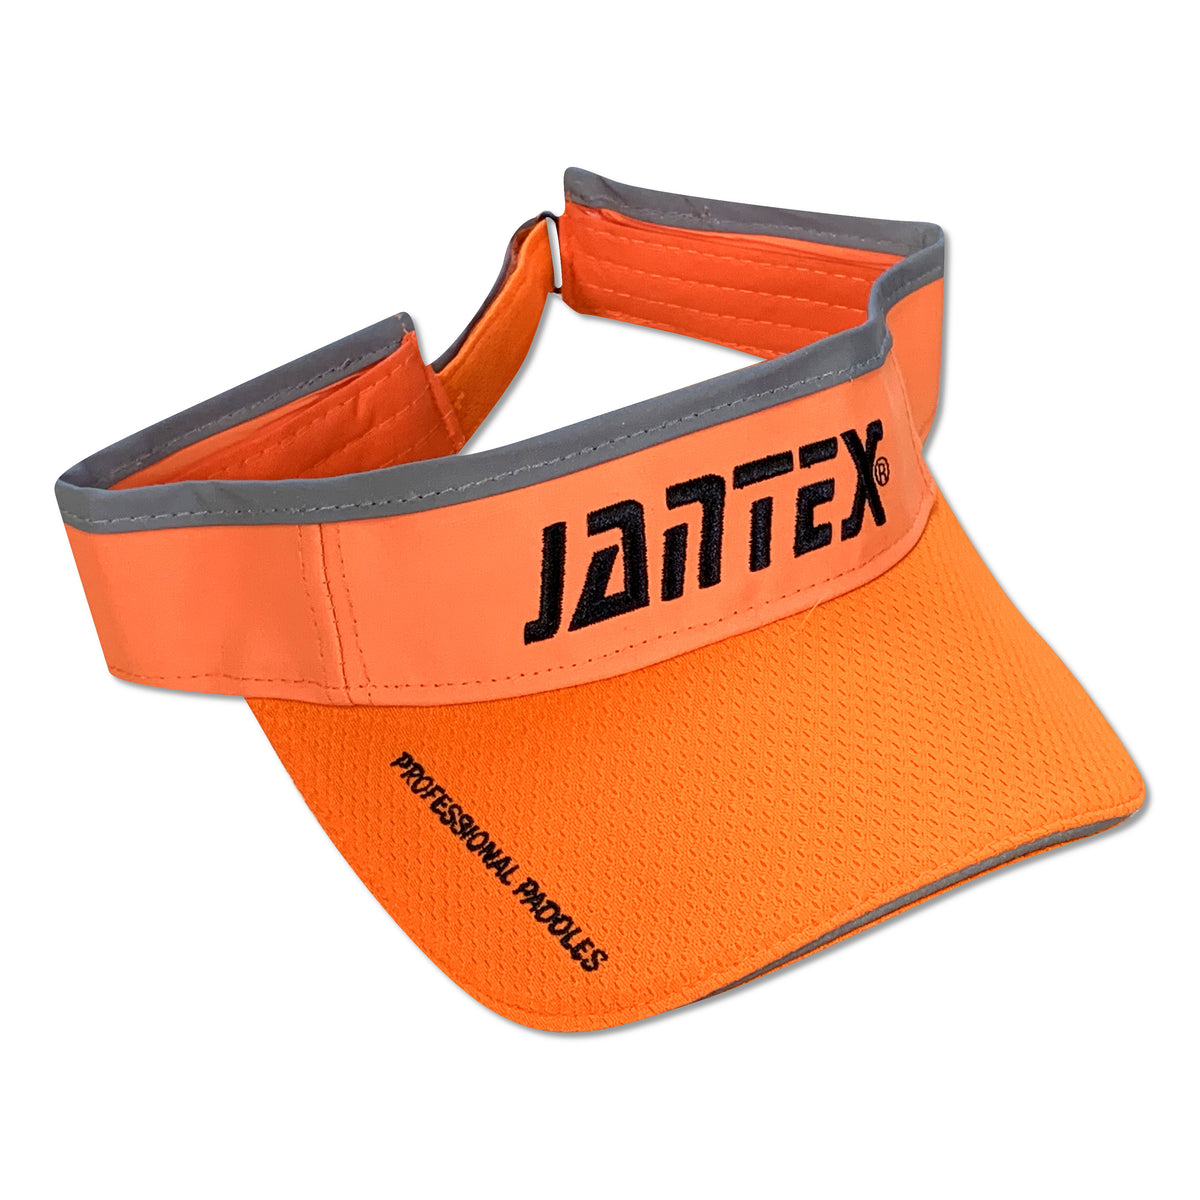 Jantex Visor orange front